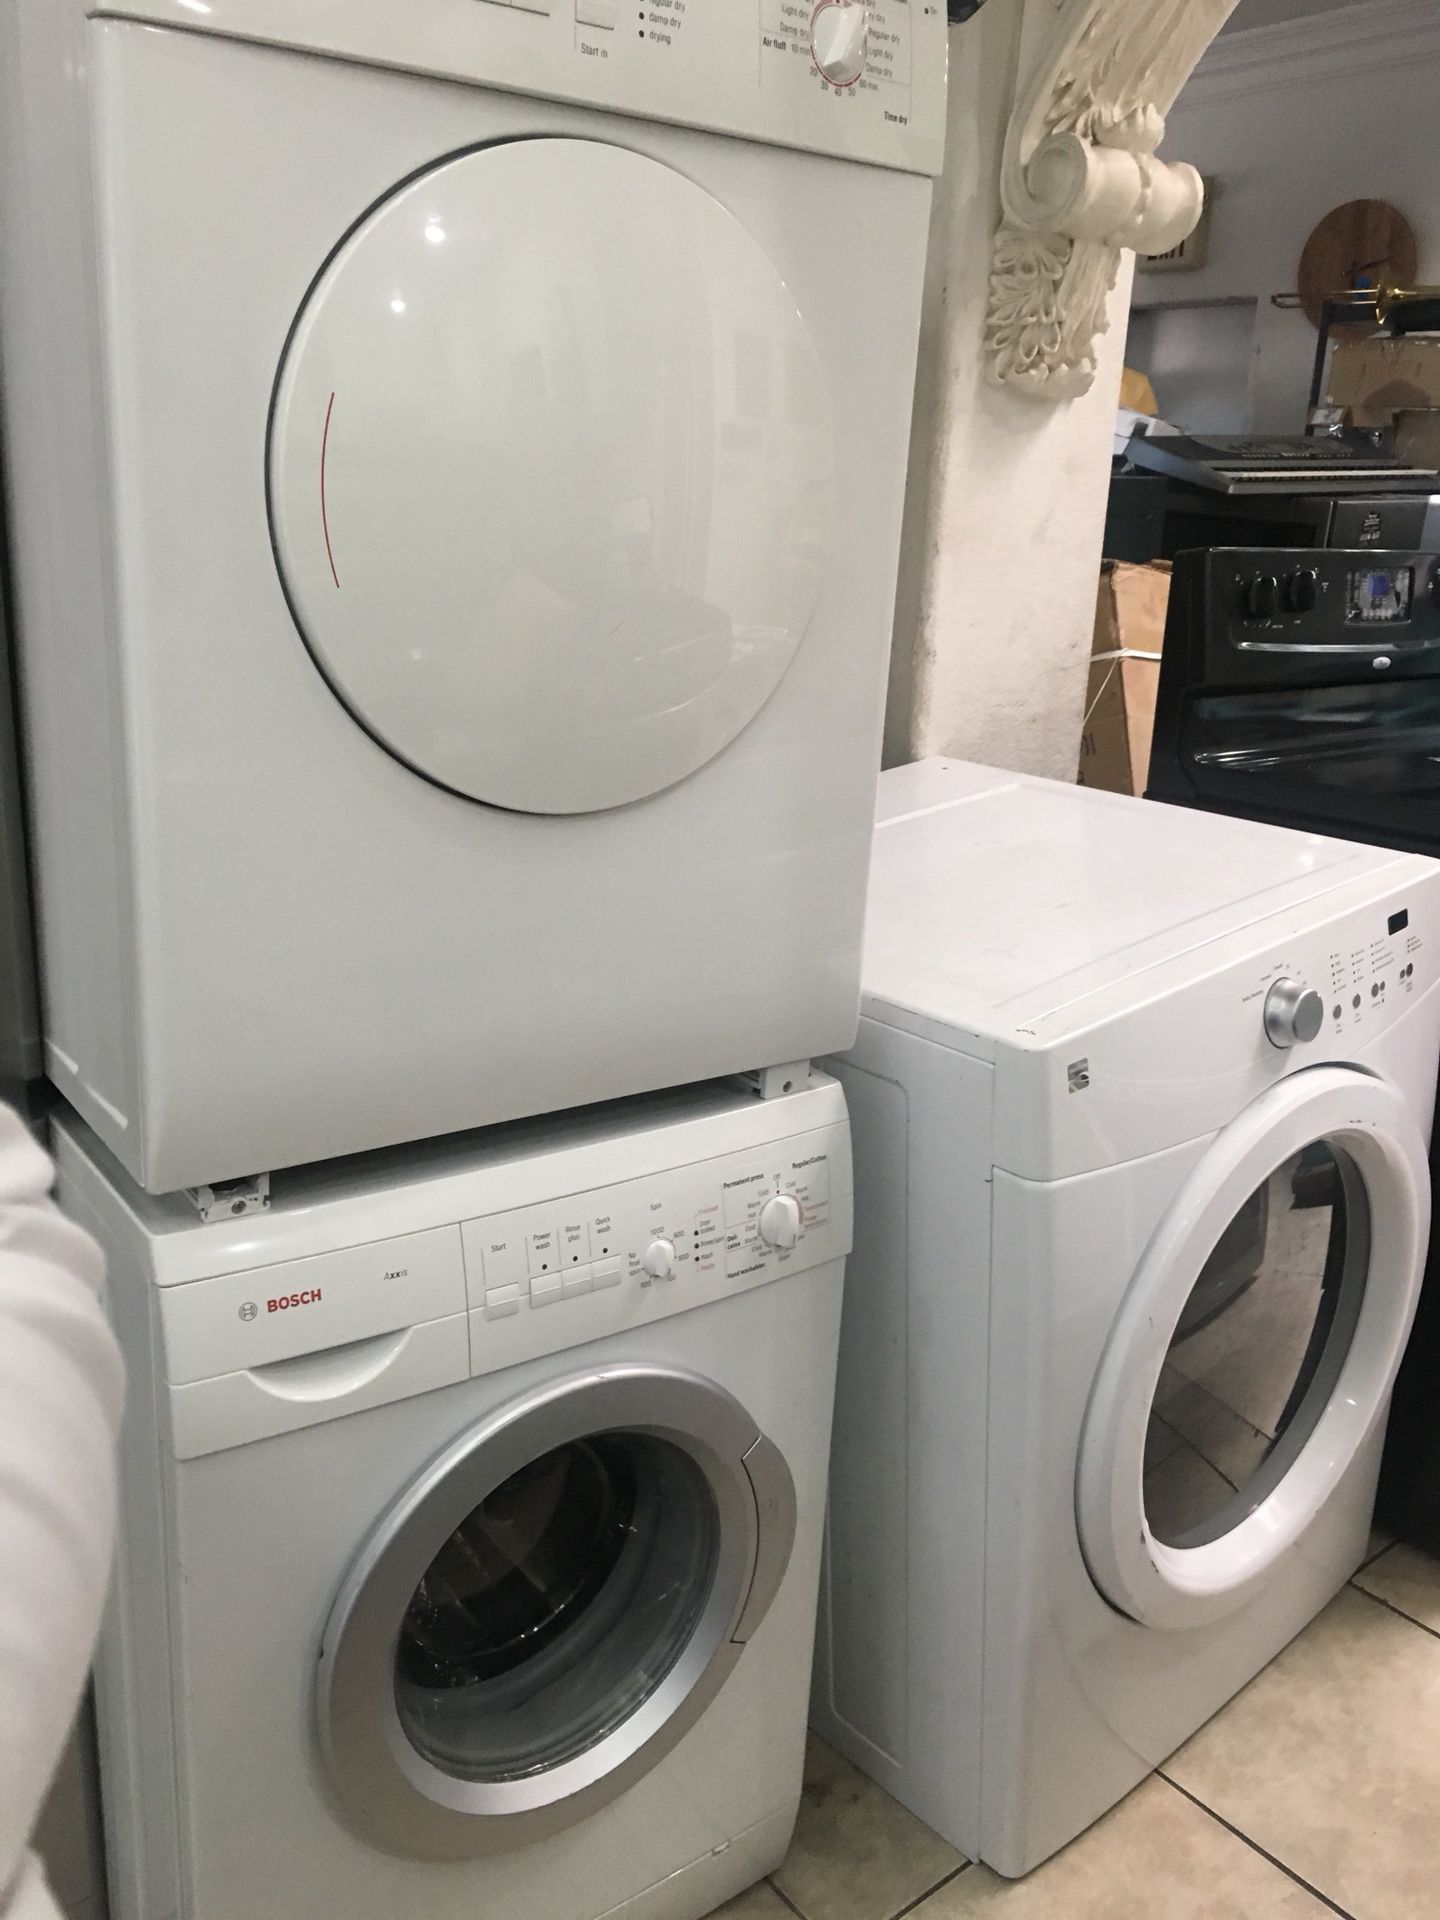 Bosch washer and dryer set